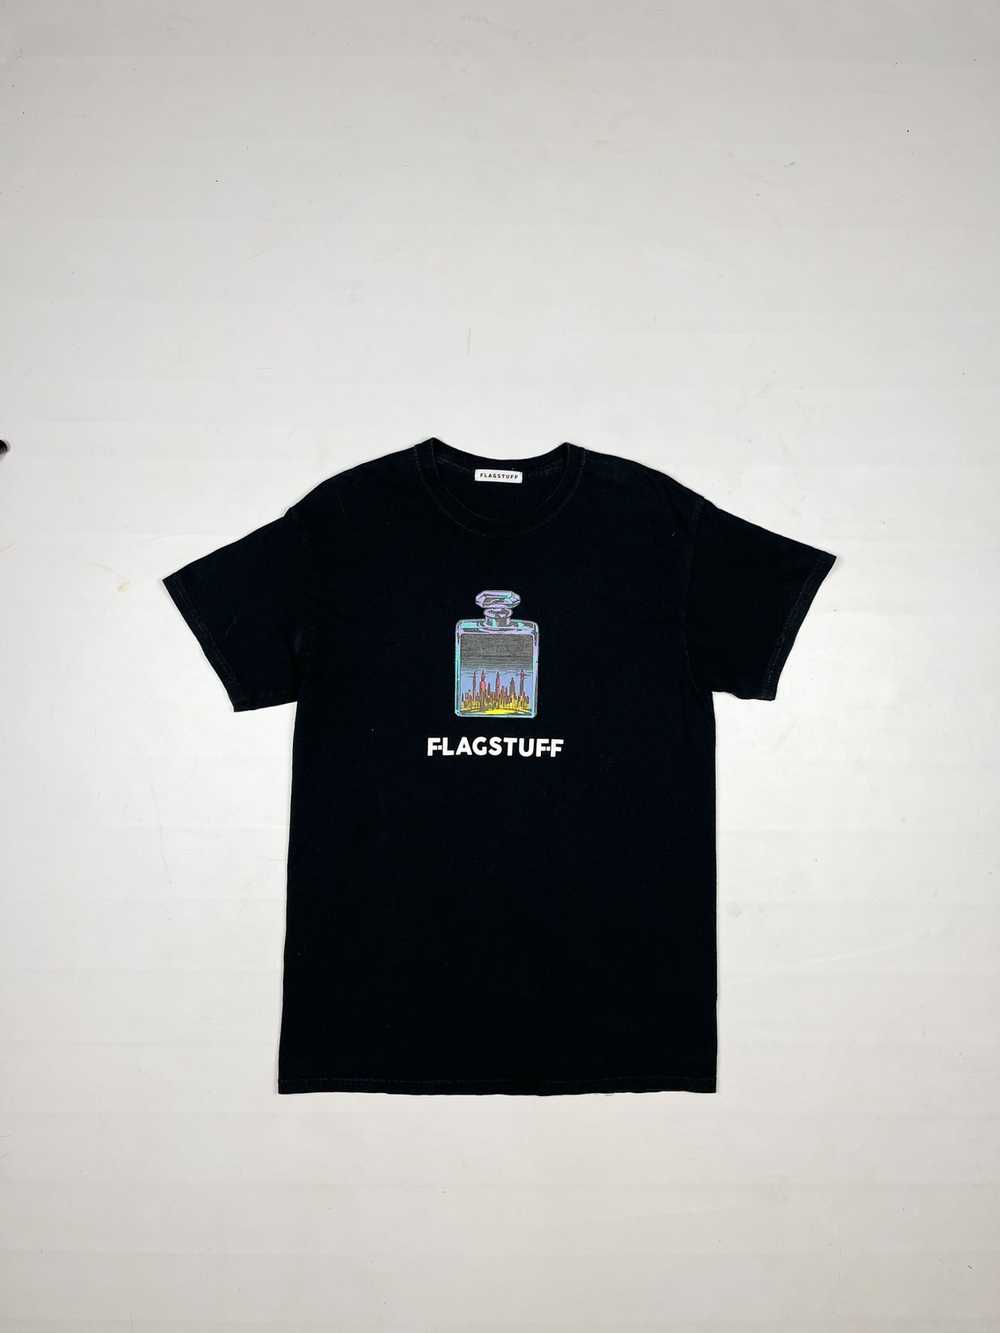 Flagstuff flagstuff black tshirt - image 1